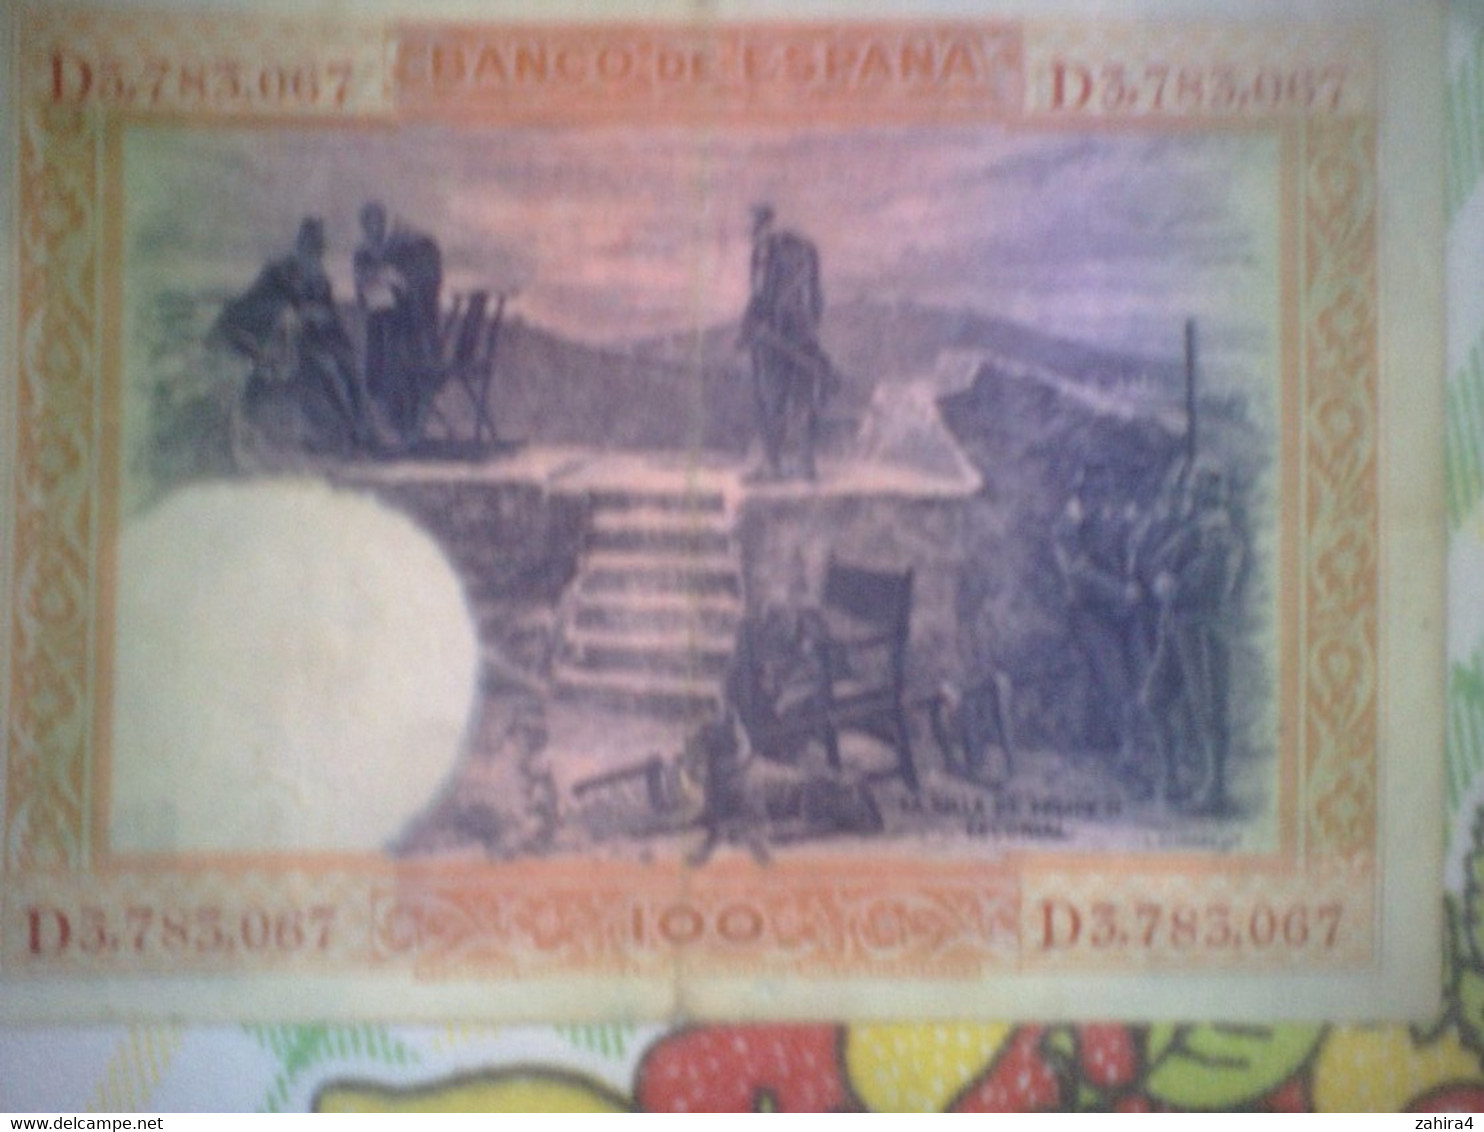 El Banco De Espana 100 Para Al Portador Cien Pesetas - Felipe II - D3,783,067 - 100 Pesetas